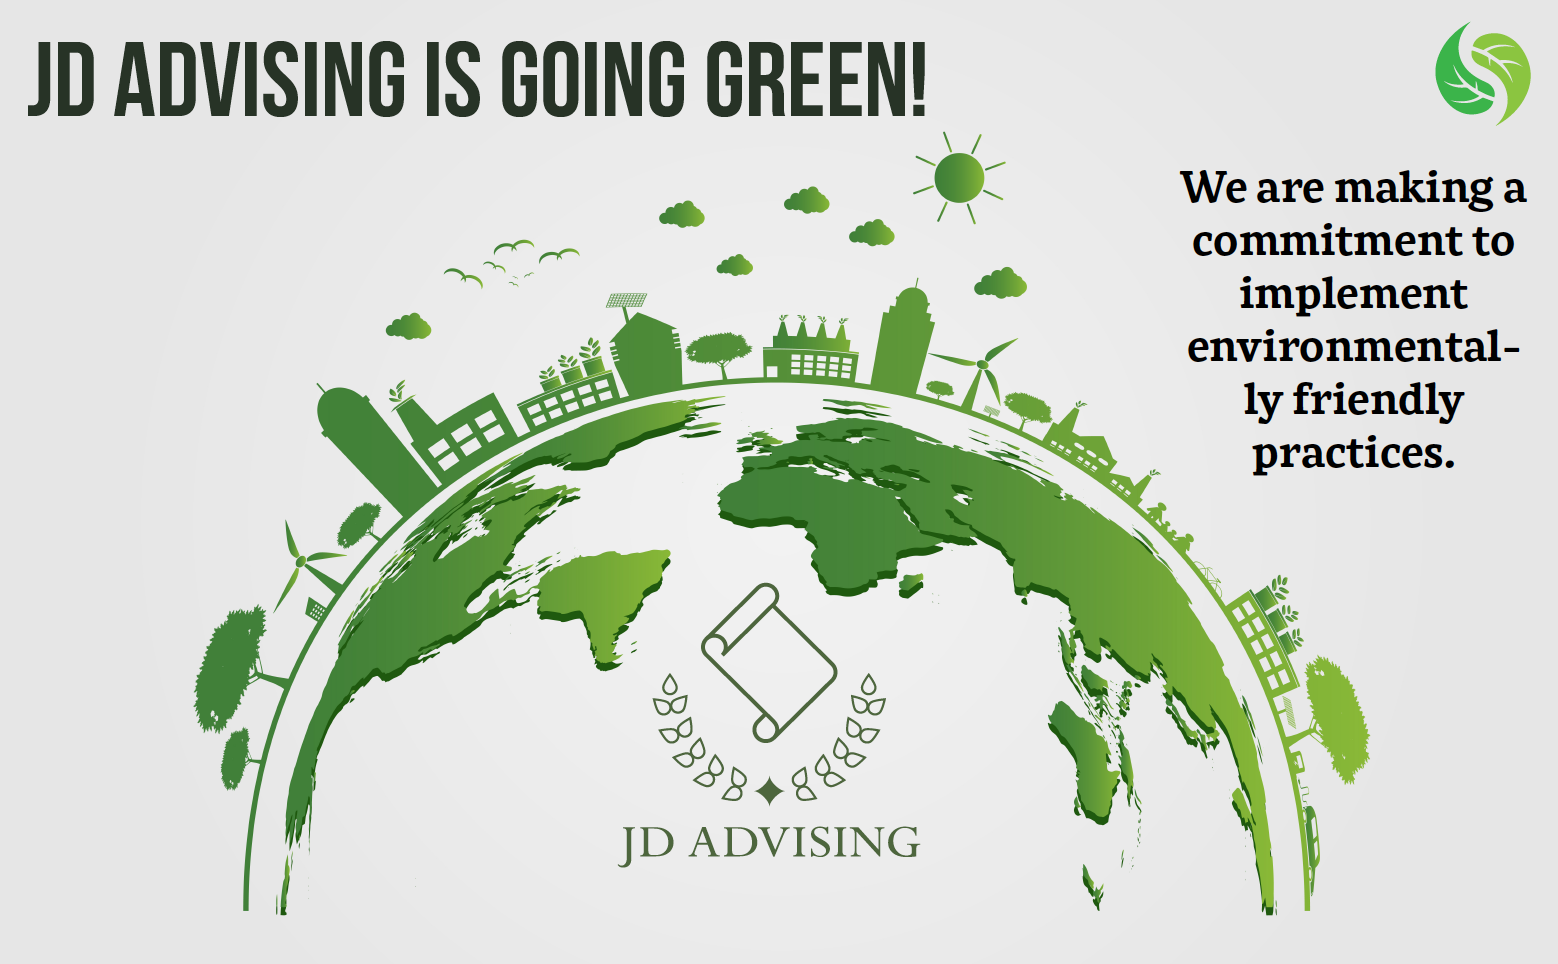 jd advising going green